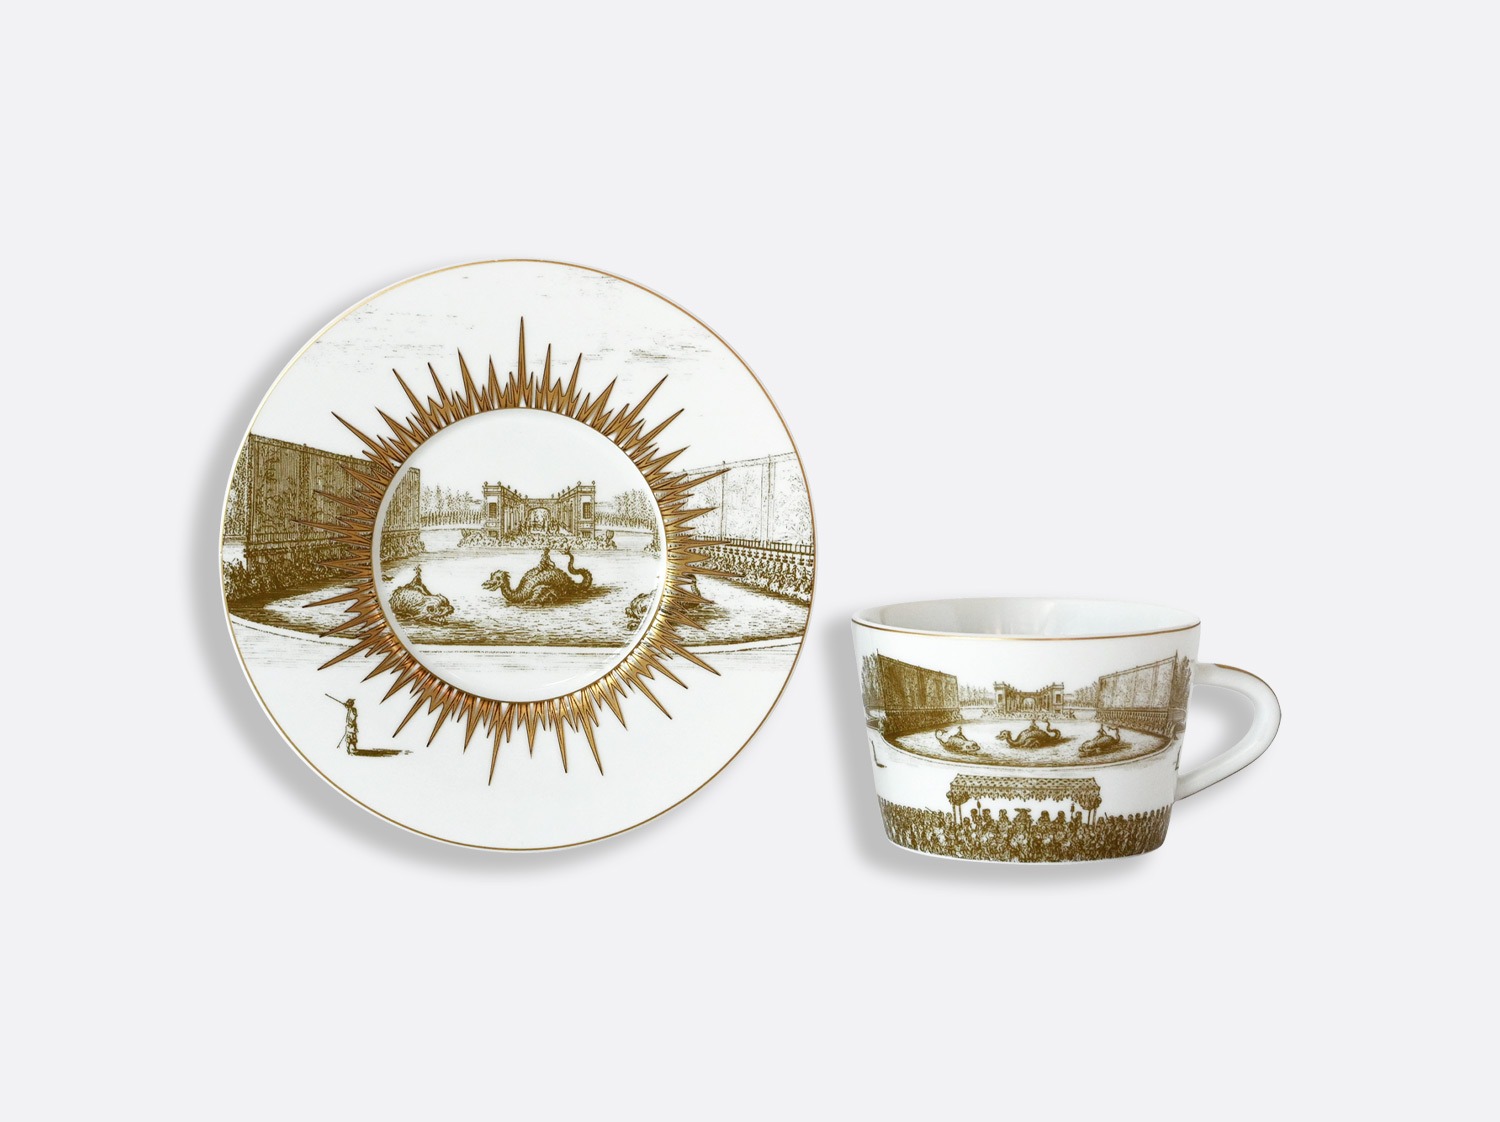 Tea cup and saucer gift box - 5 Oz Tea Cups